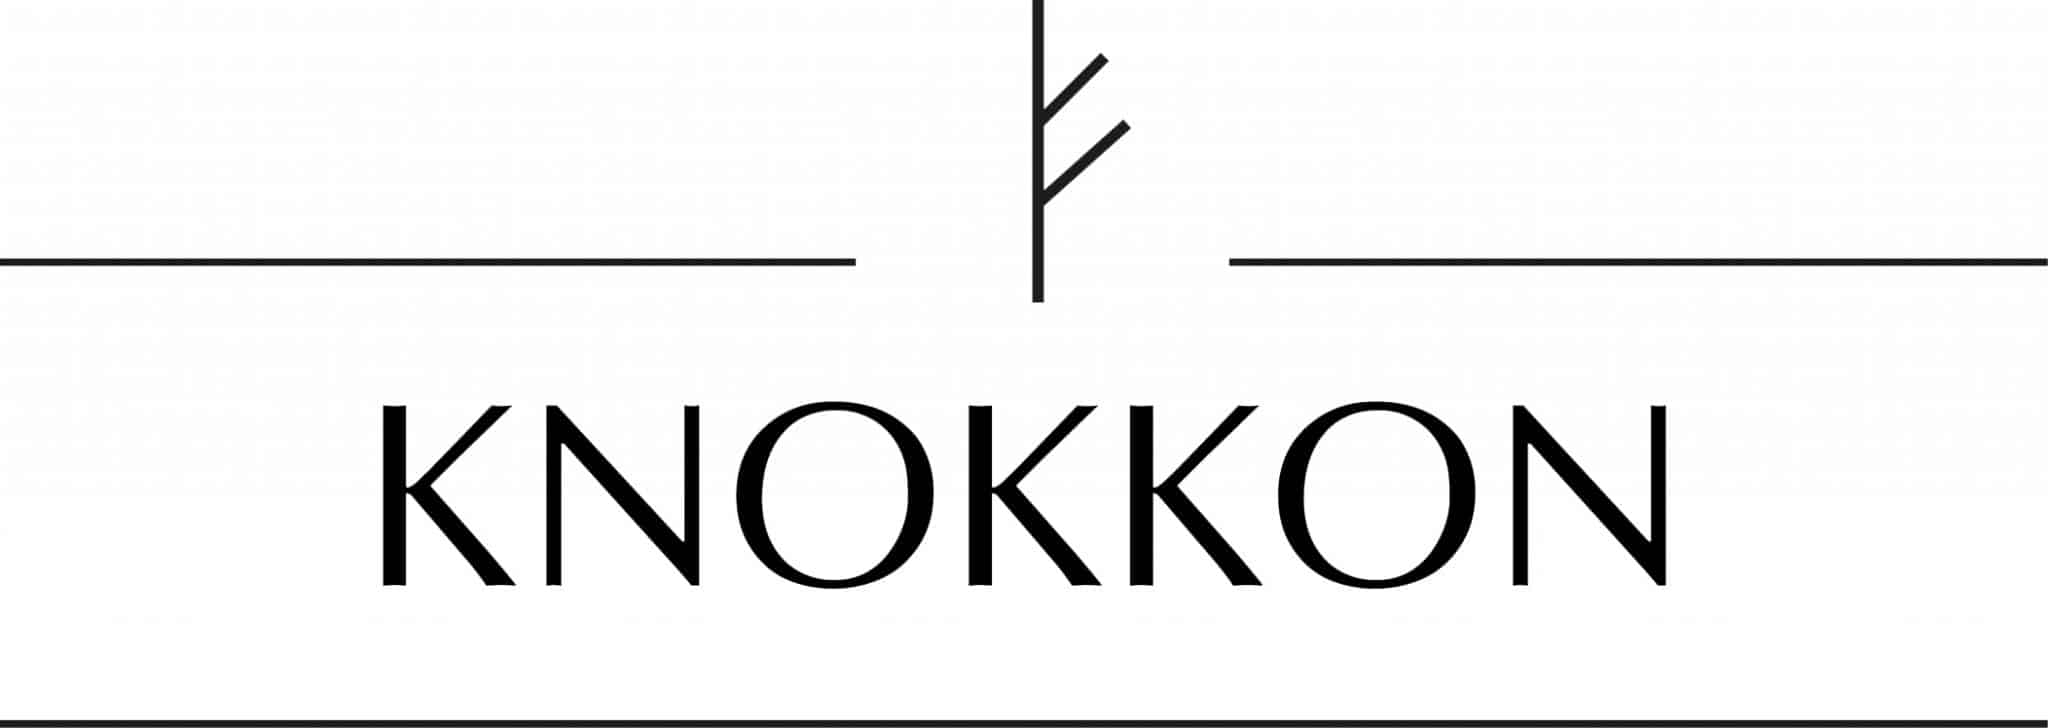 Knokkon ekologiset kankaat logo